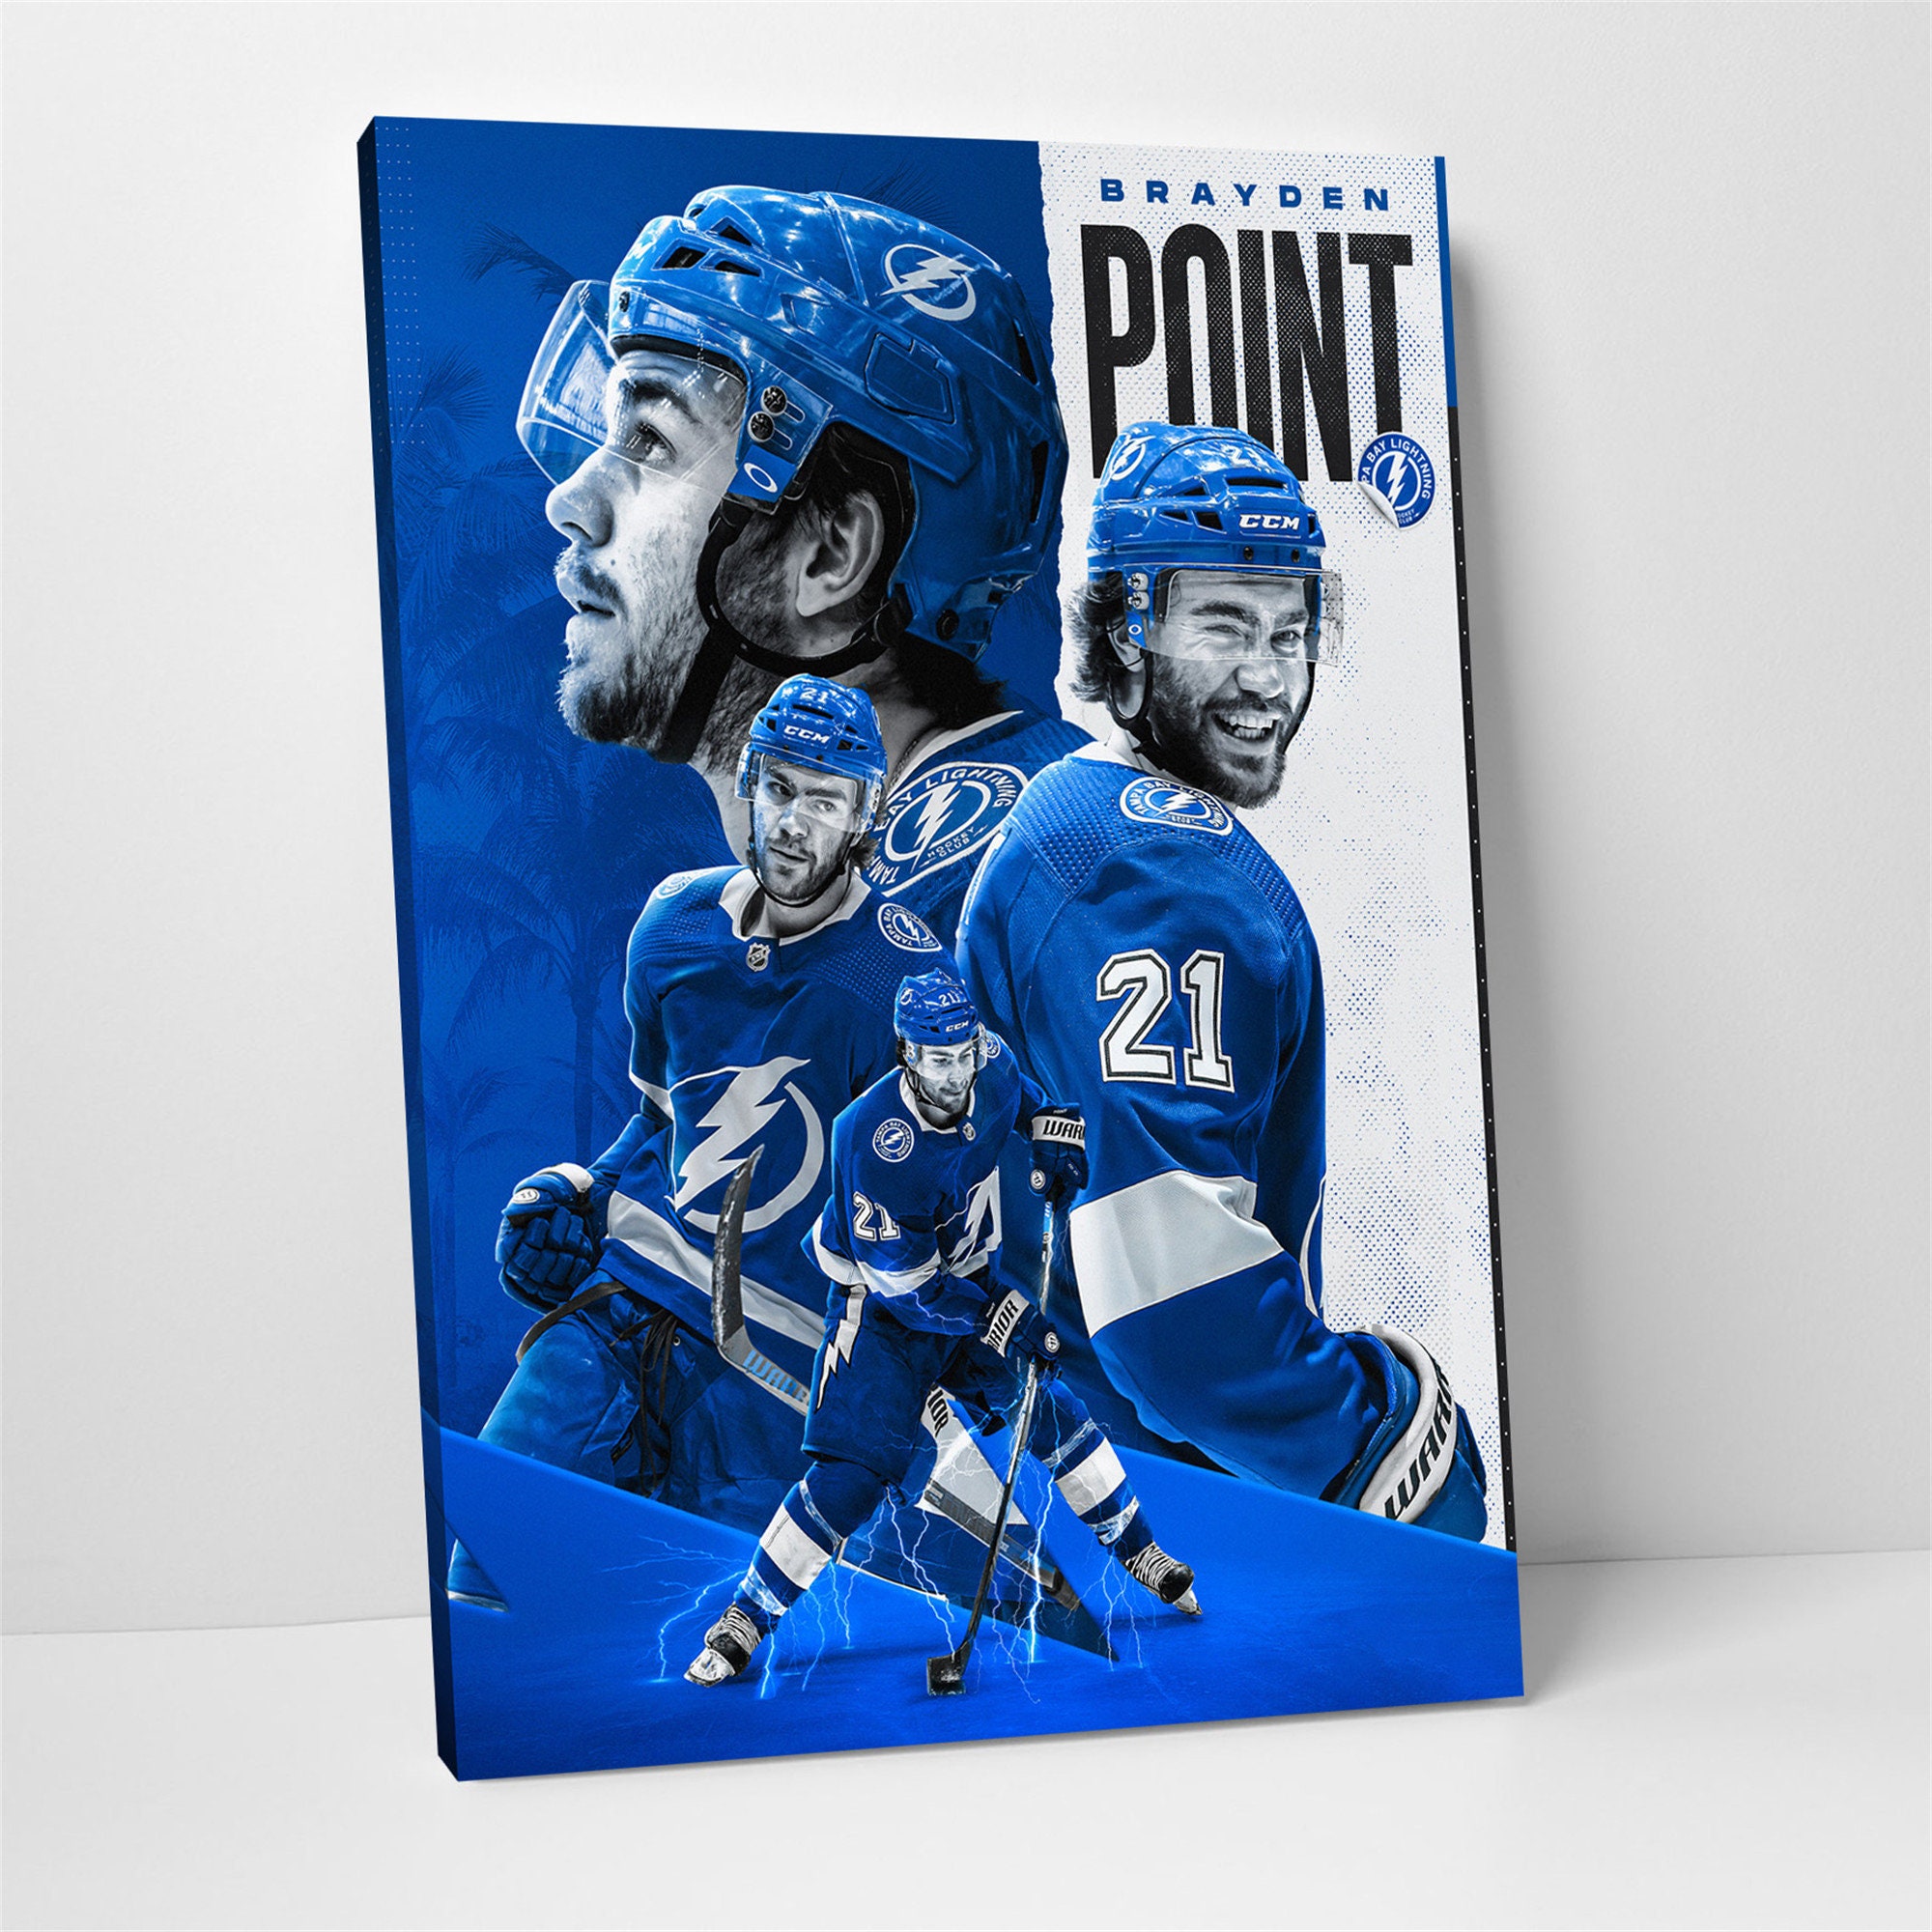 Funny brayden Point 21 Tampa Bay Lightning hockey player poster